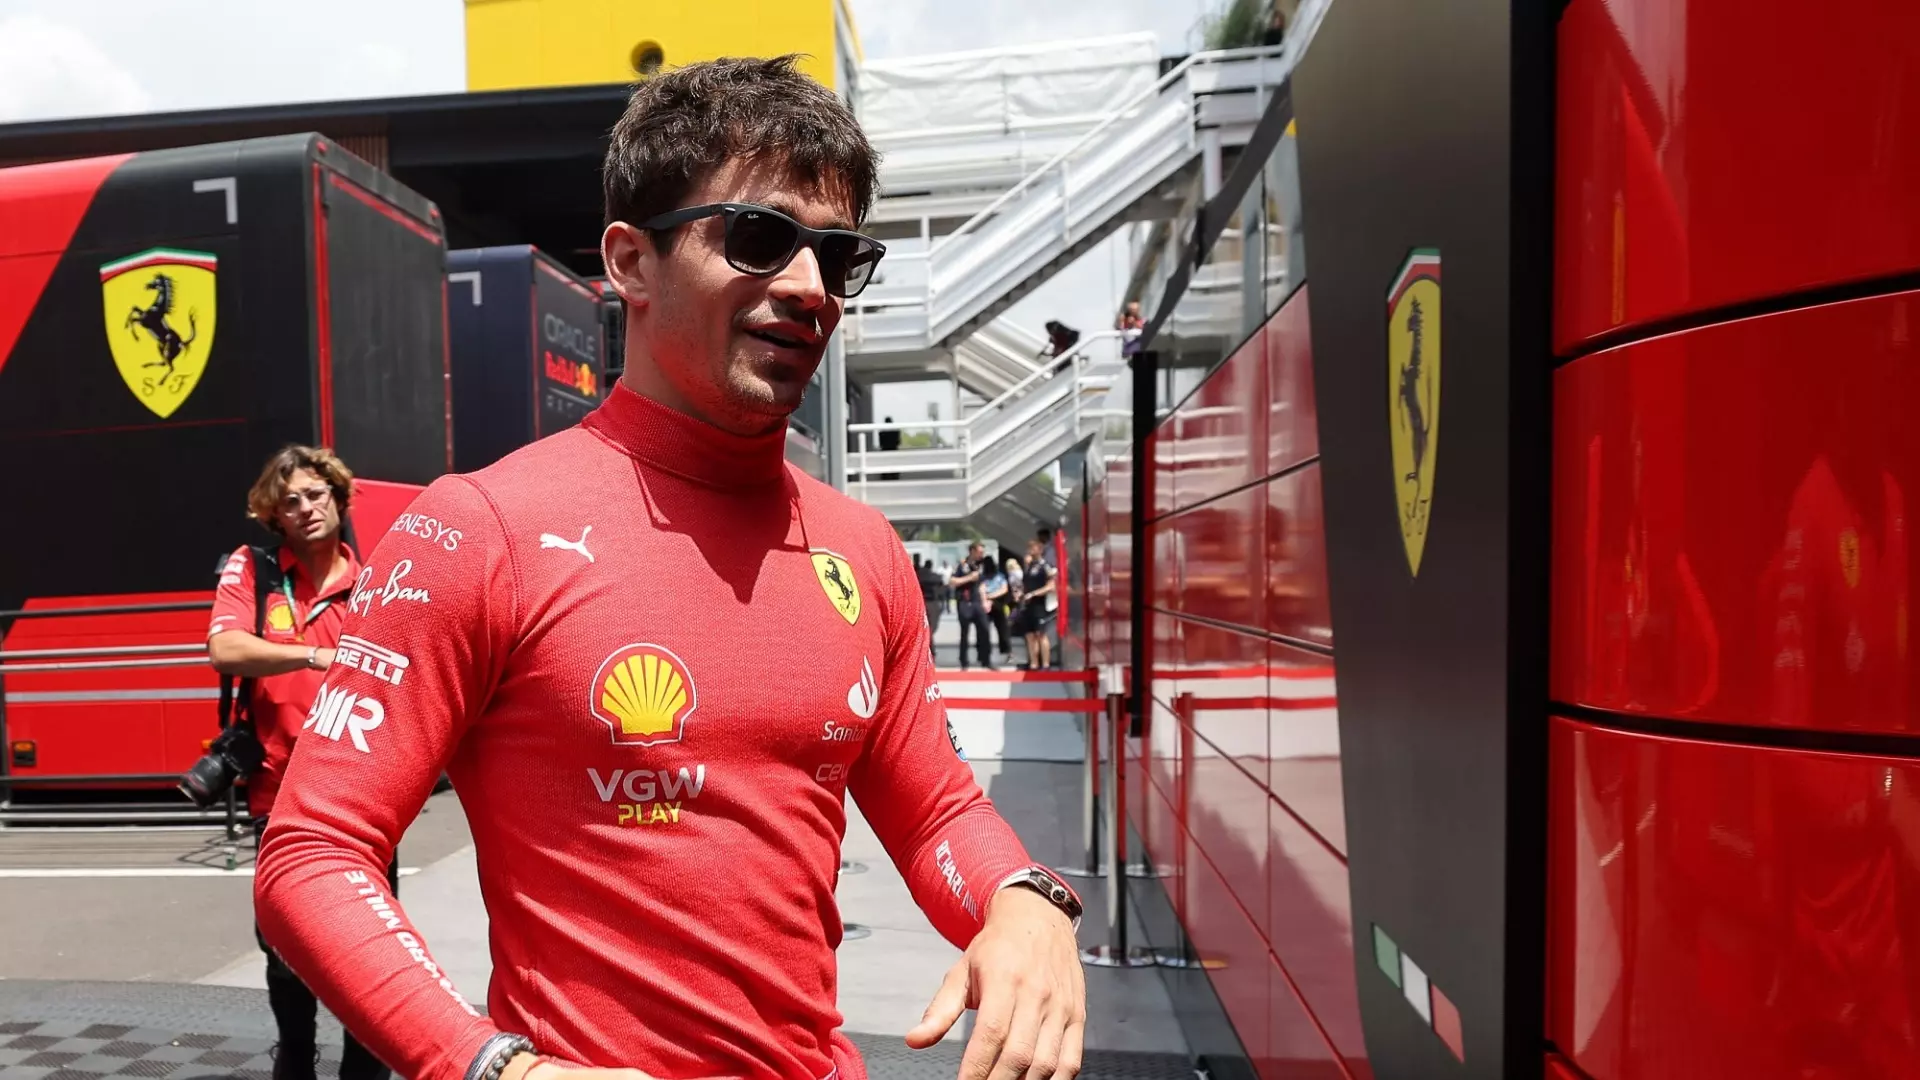 Disastro Ferrari, Leclerc penultimo: “Non ho risposte”